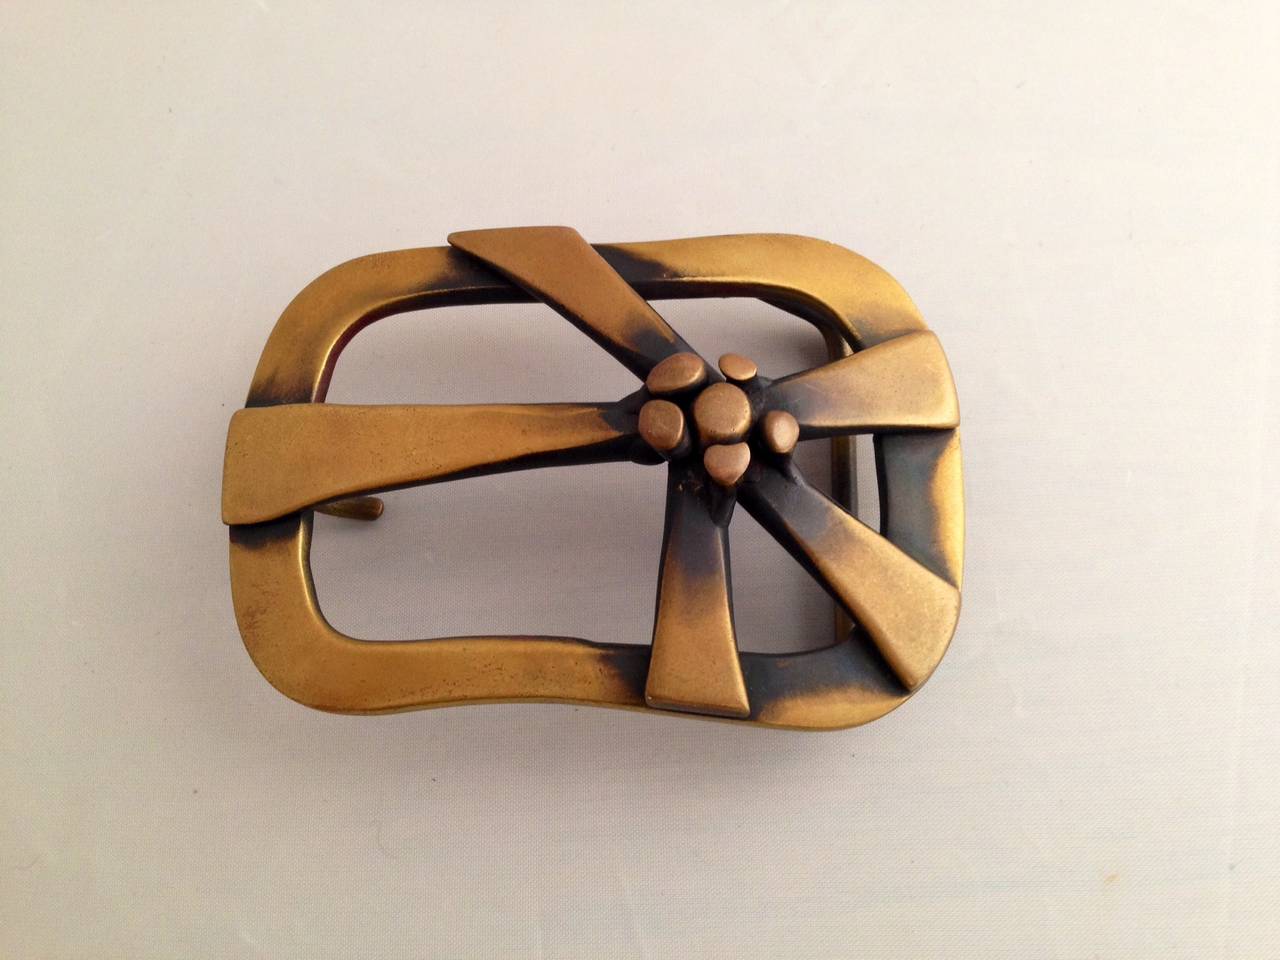 Large, bronze belt buckle created by Jack Boyd of San Diego.  Buckle measures 3 5/8